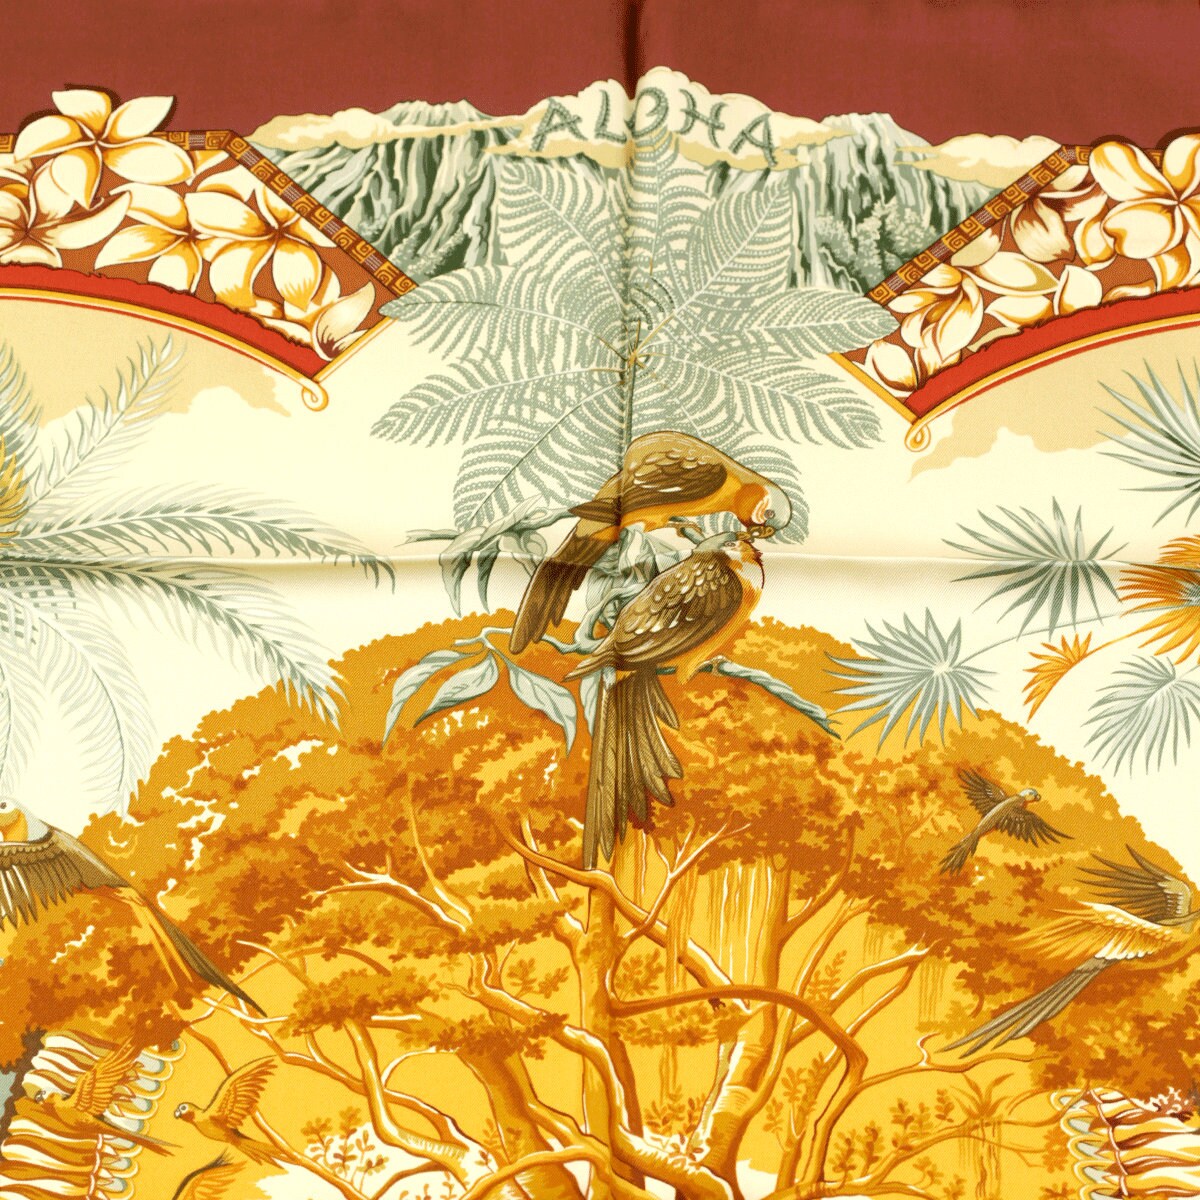 Hermes Scarf "Aloha" by Laurence Bourthoumieux 90cm Silk | Carre Foulard